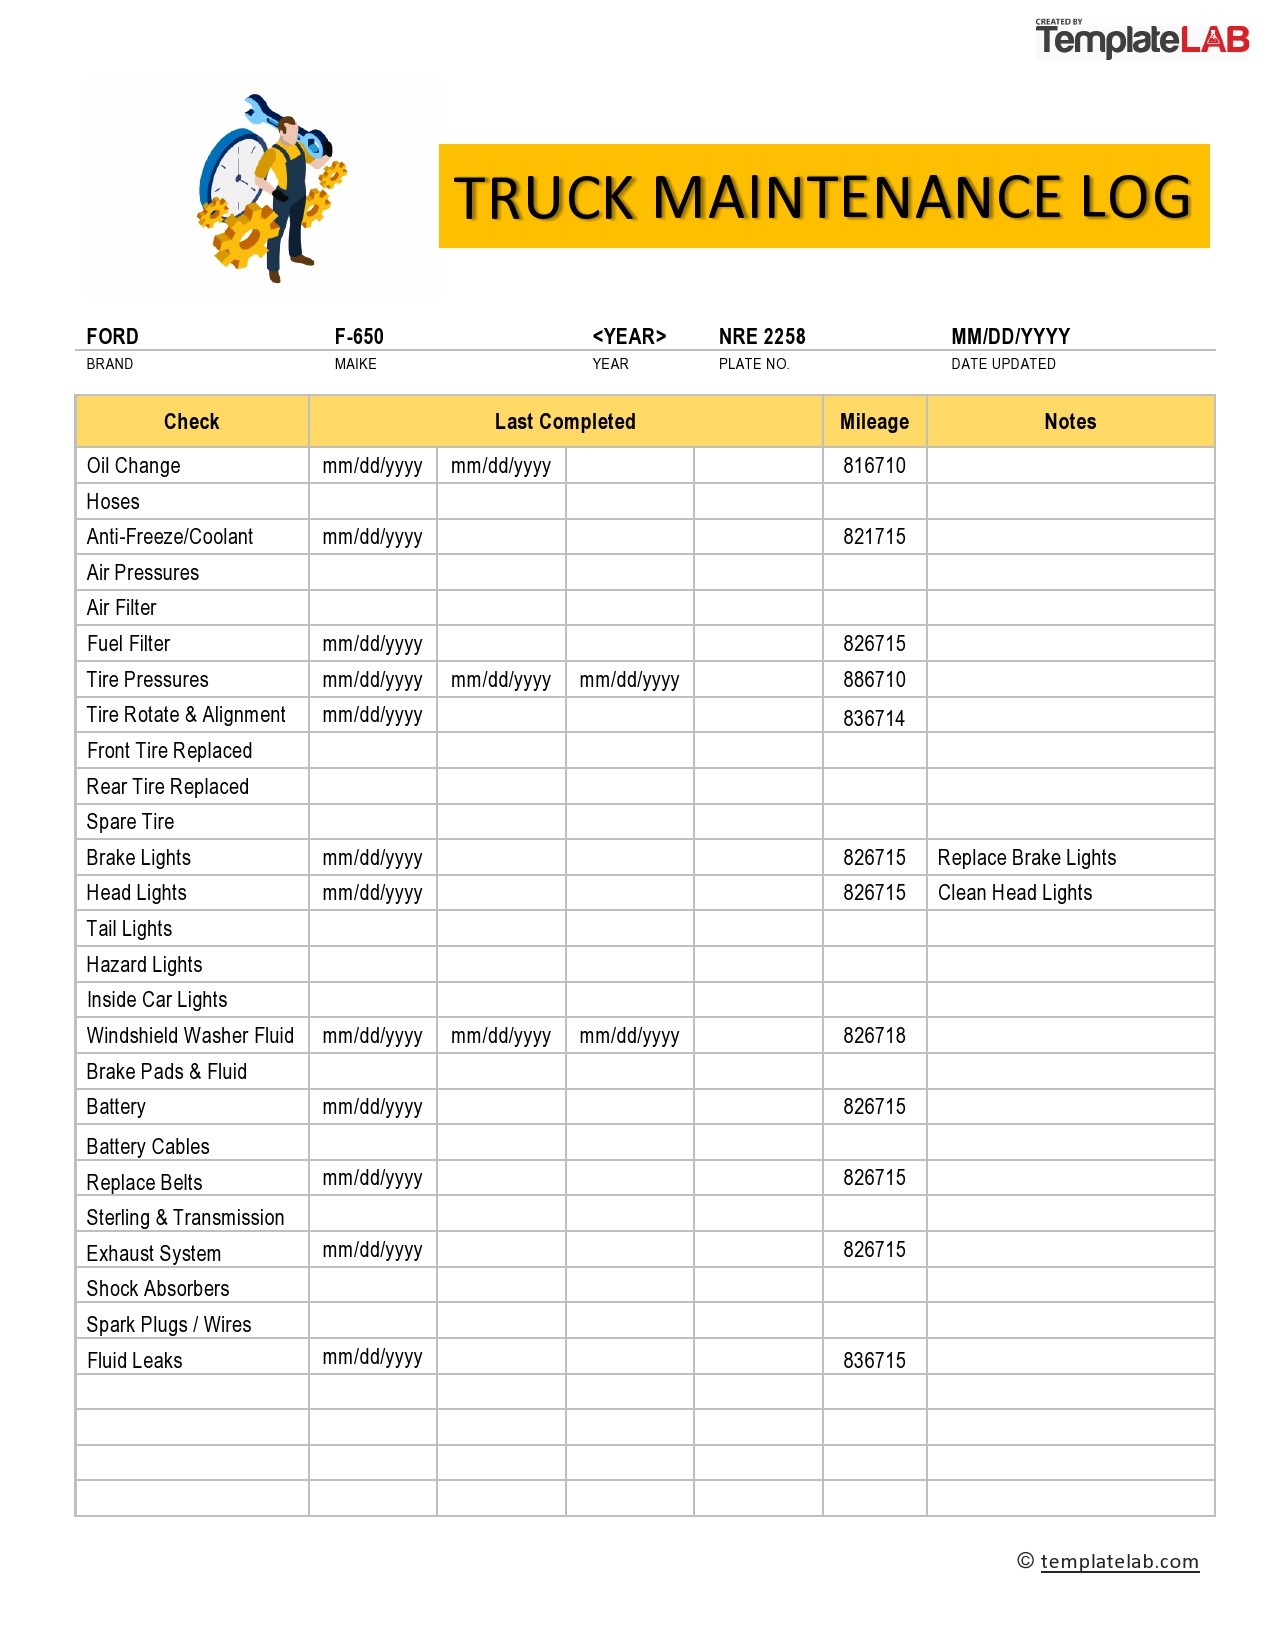 Free Truck Maintenance Log 02 - TemplateLab.com